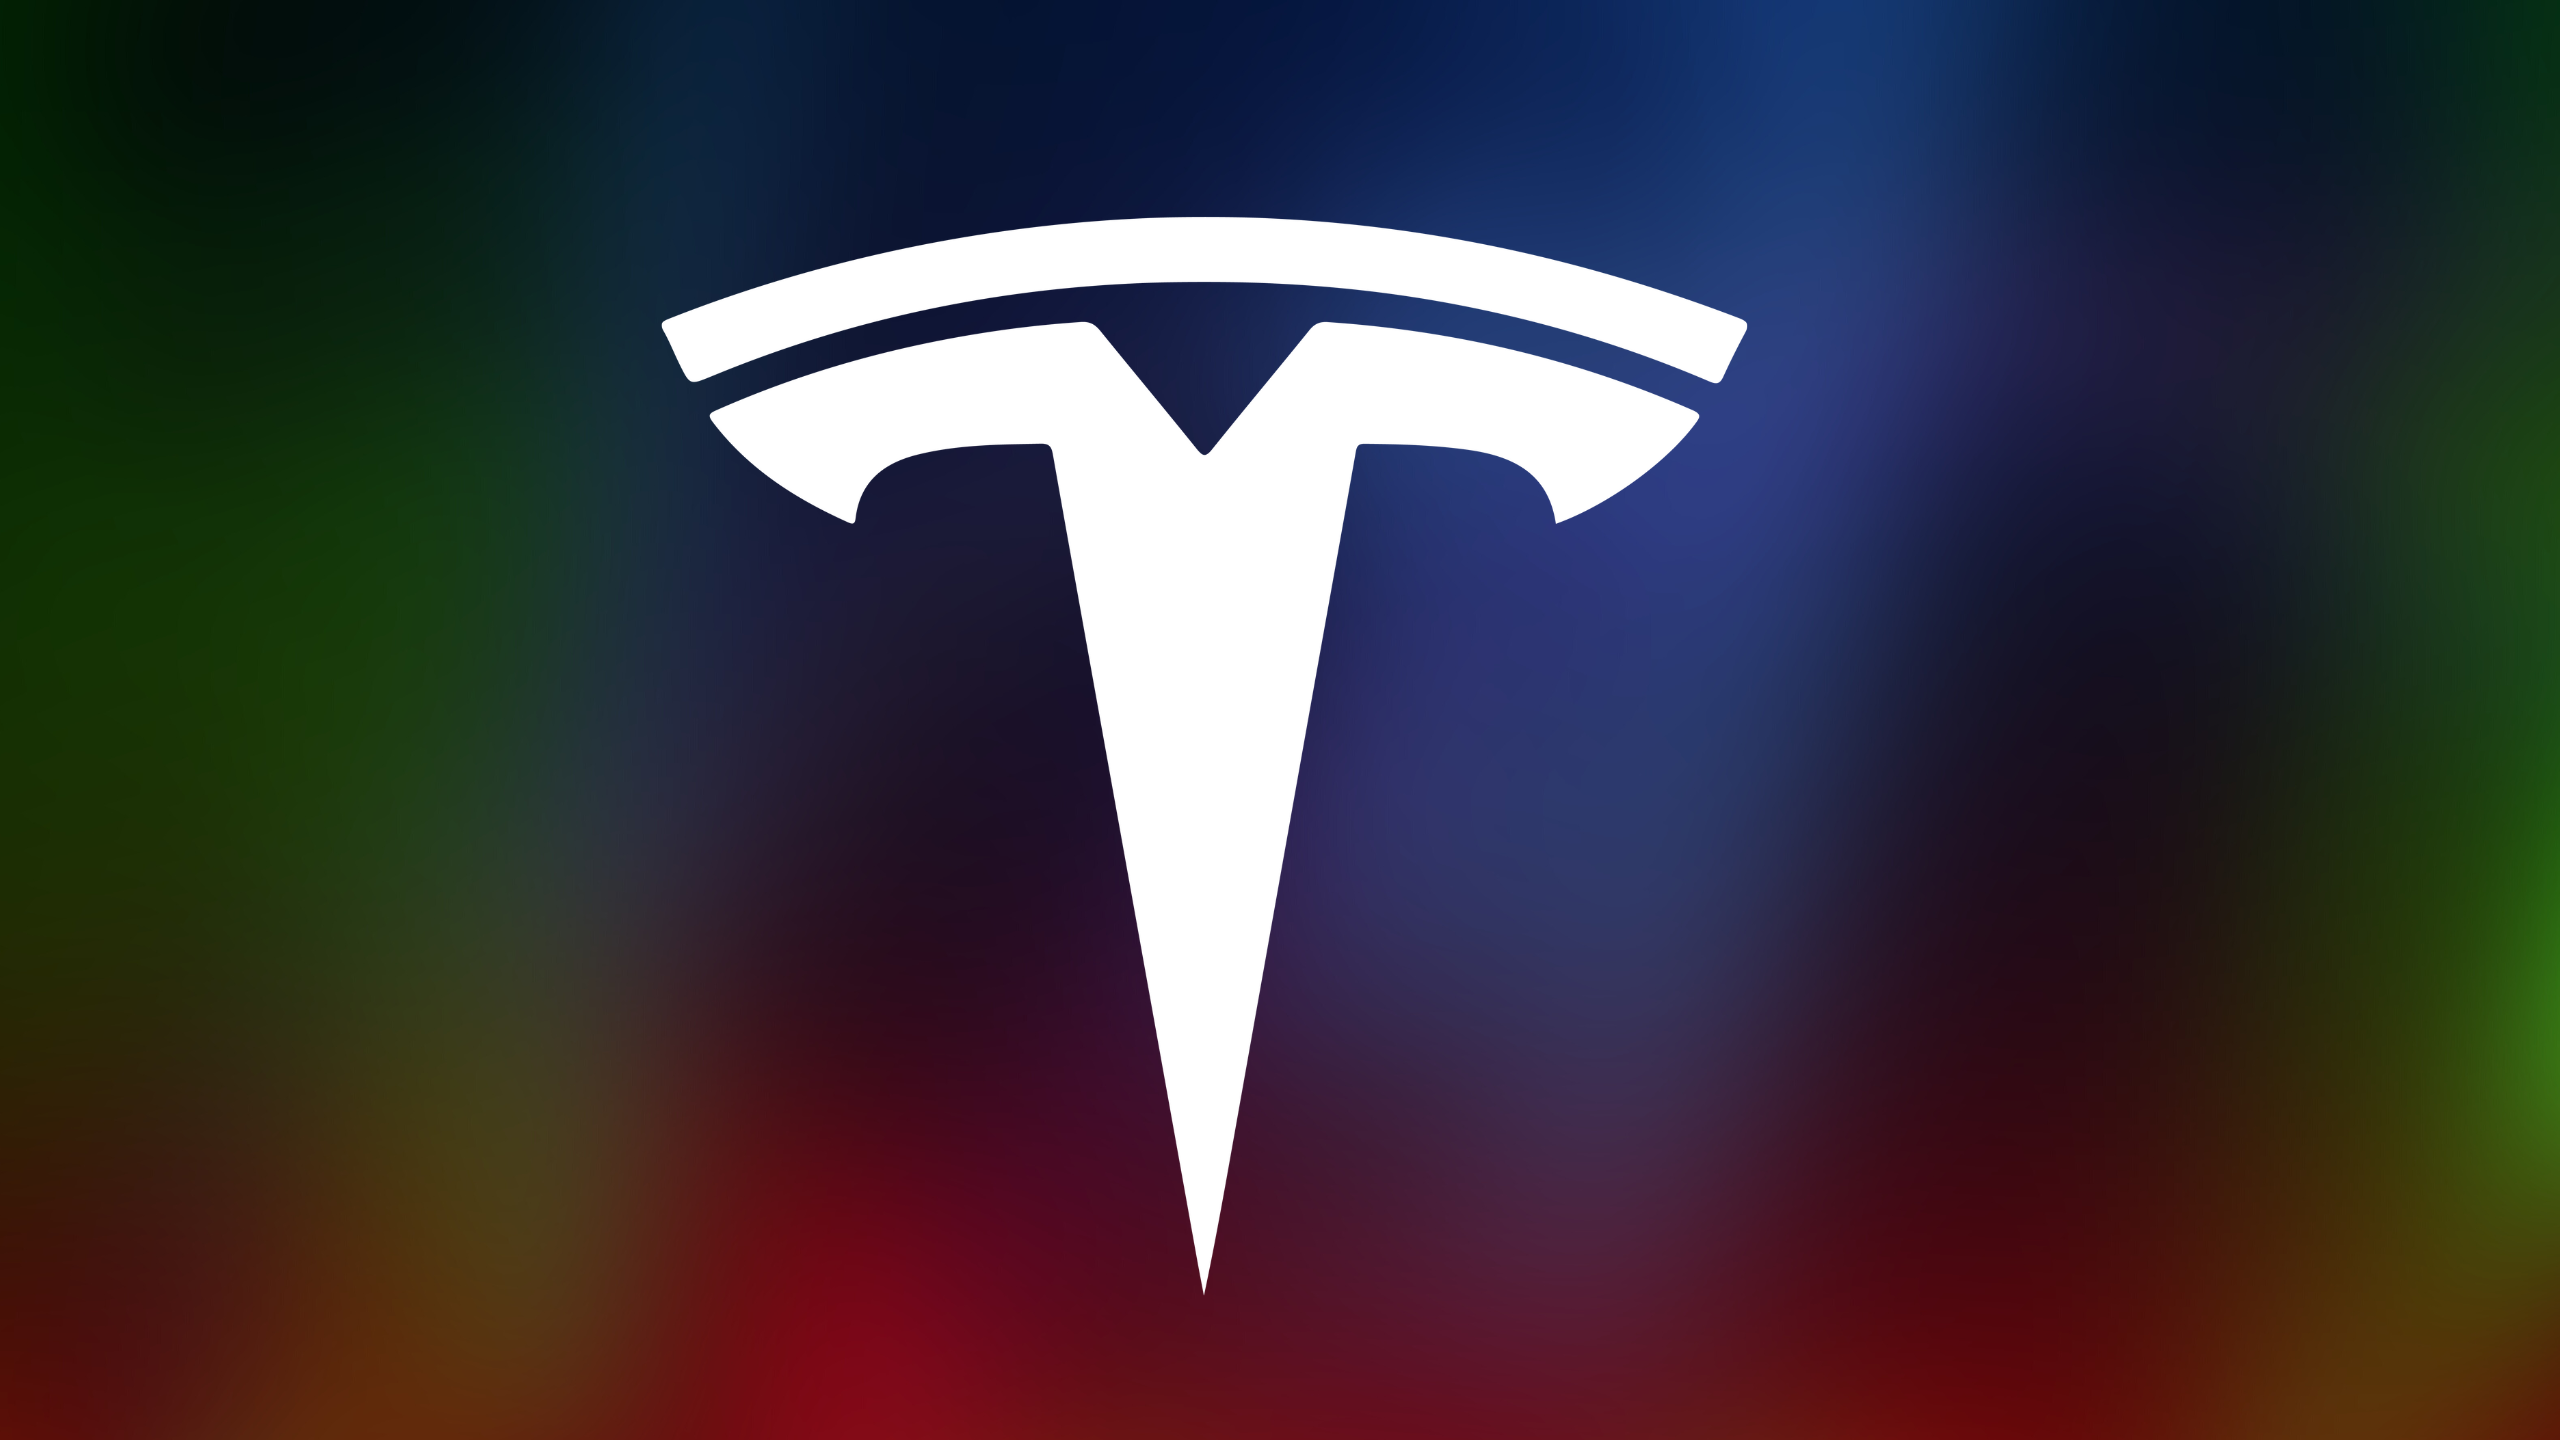 Tesla ($TSLA) included in Saxo Bank top 10 July stocks